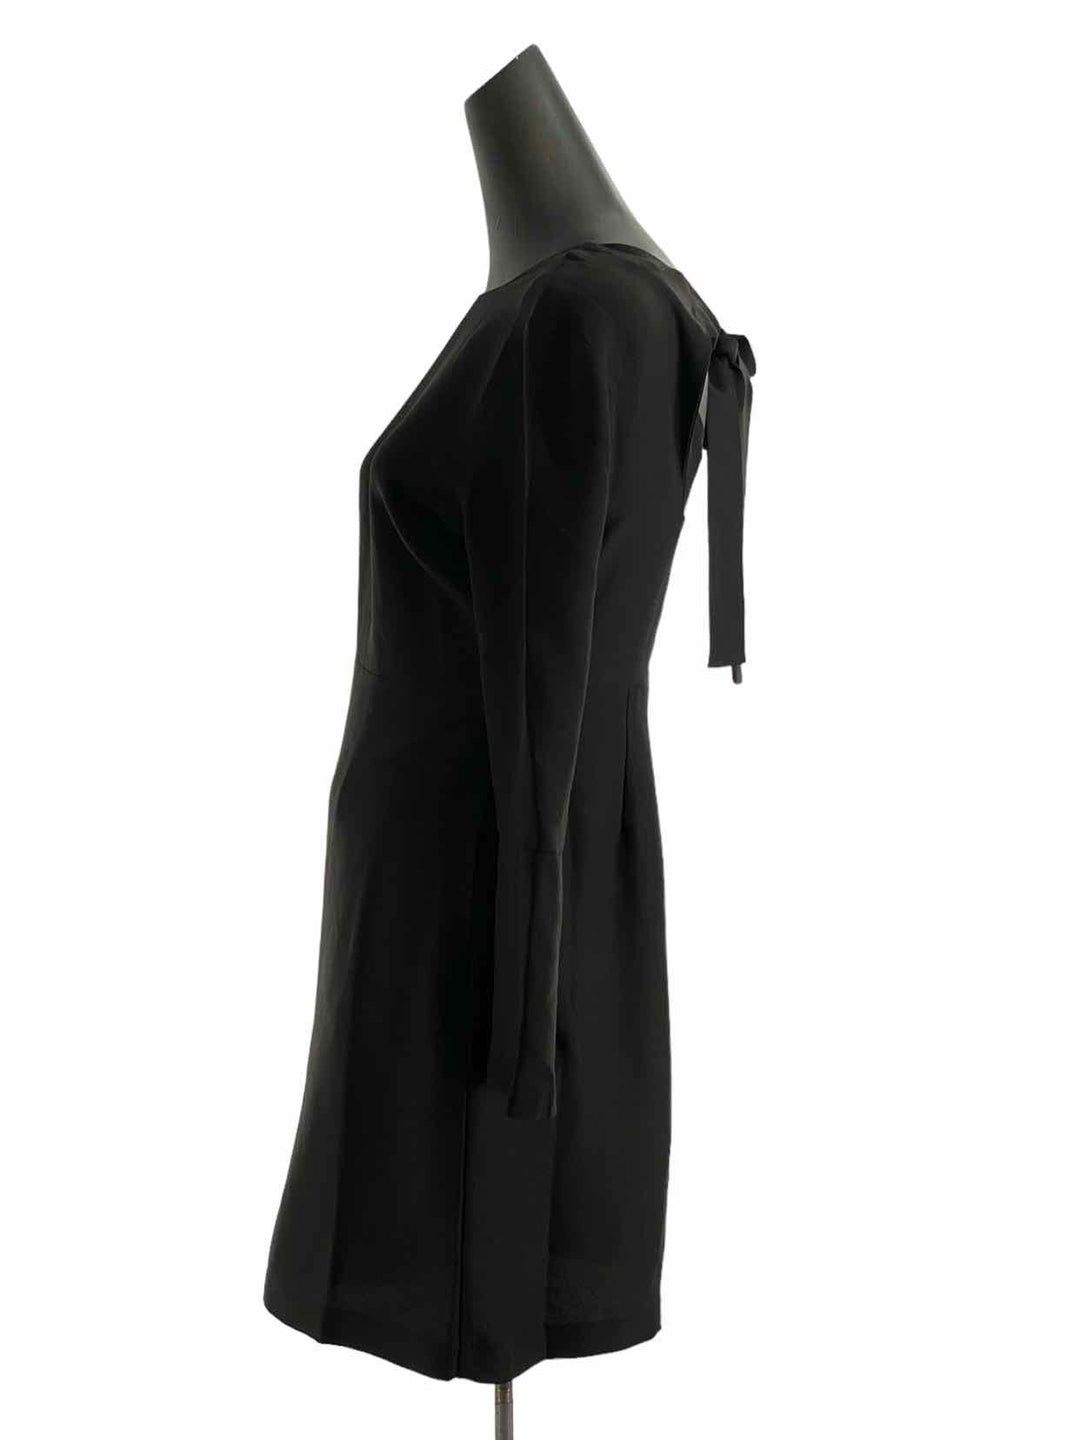 Banana Republic Size 4P Black Dress